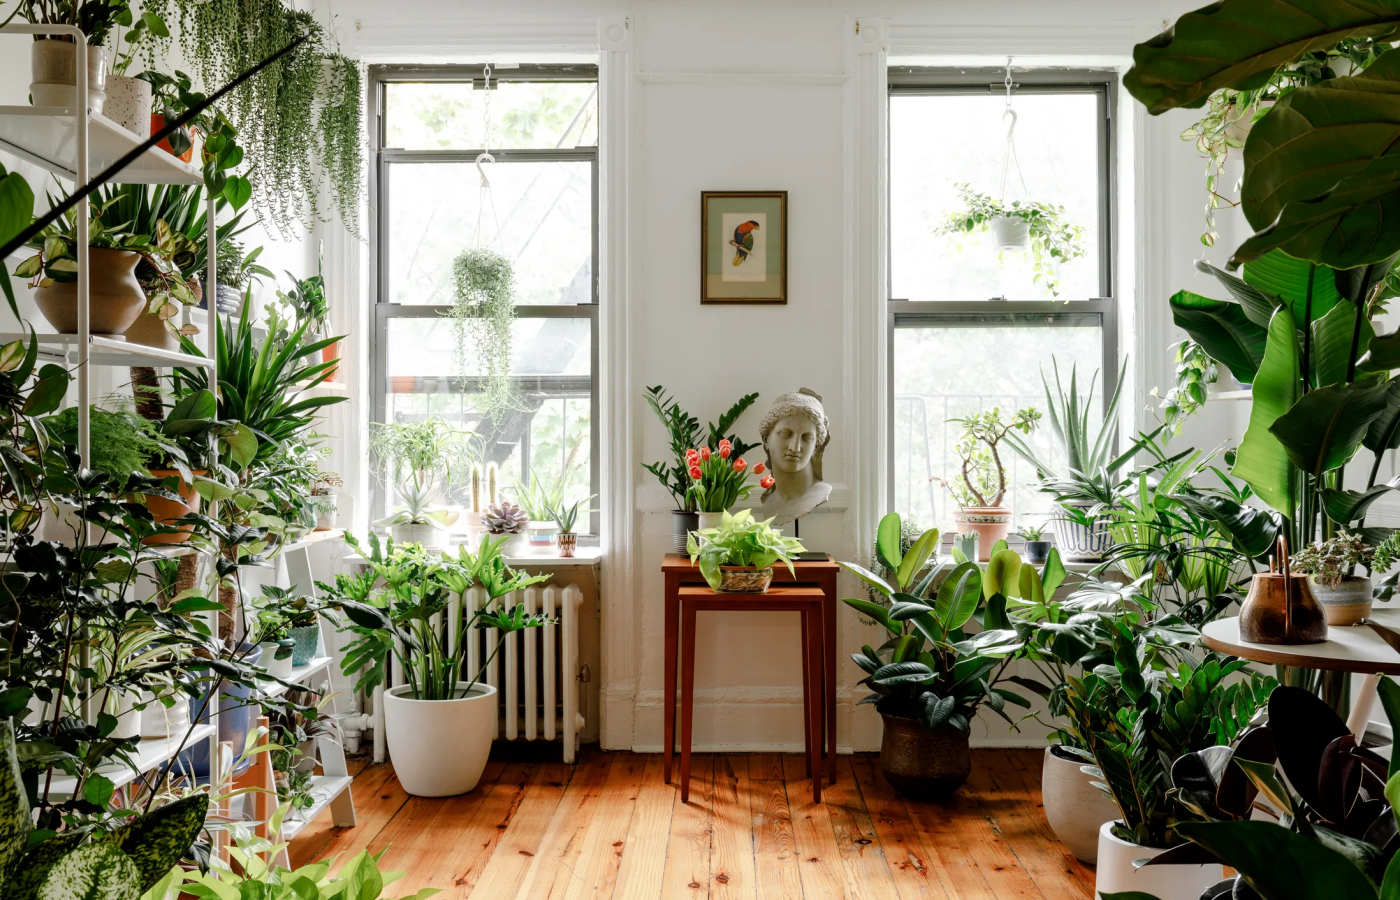 DIY Living Wall: A Creative Way to Add Greenery to Any Room